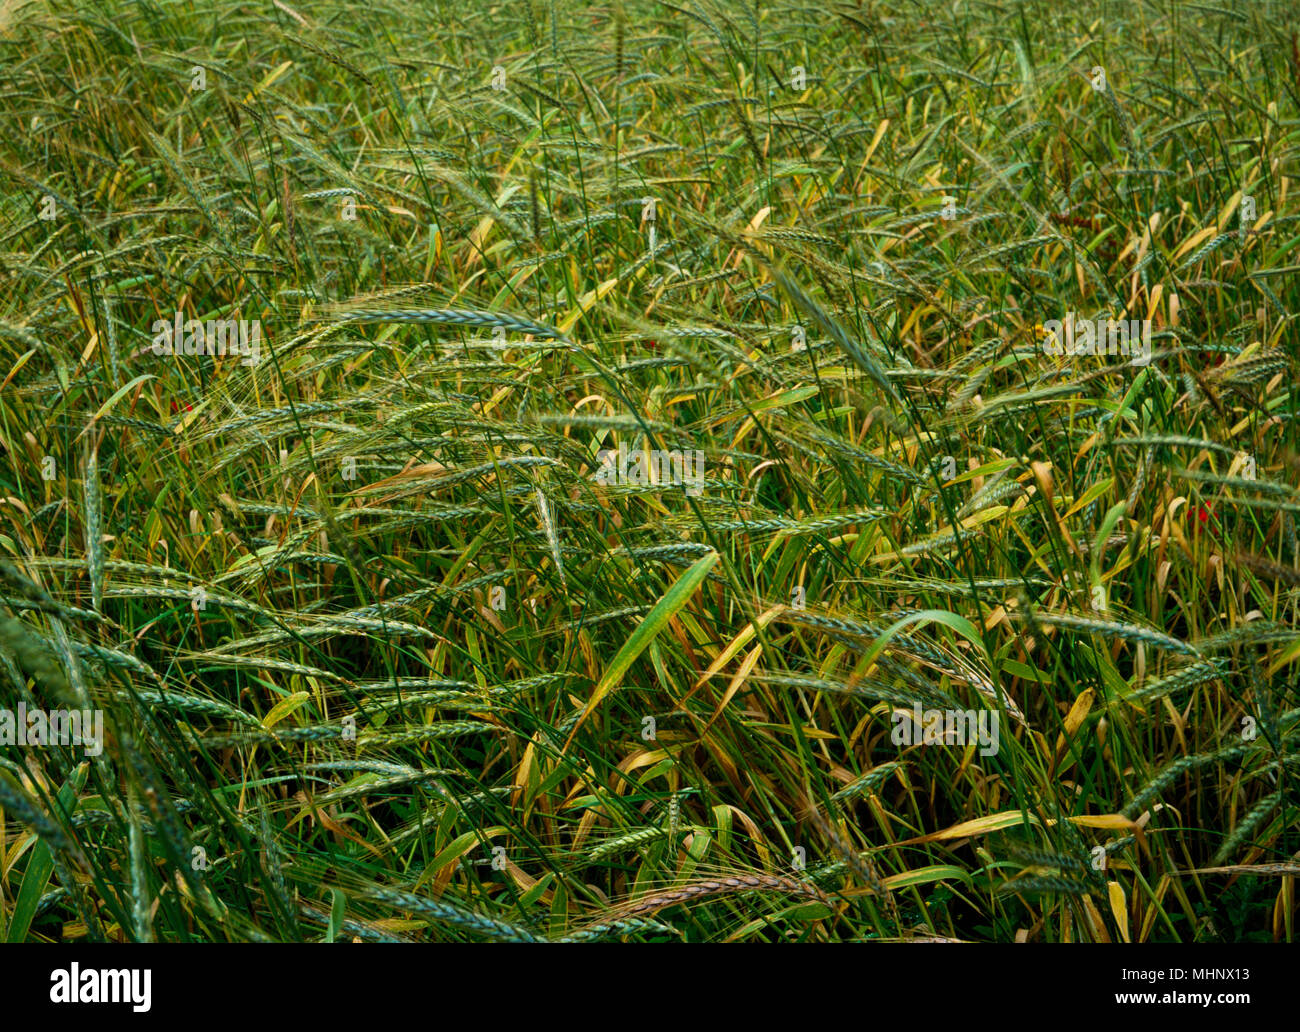 Spelt wheat (Triticum spelta) grown at Butser Ancient Farm, Hampshire, England as part of an experimental program of growing prehistoric crops. Stock Photo